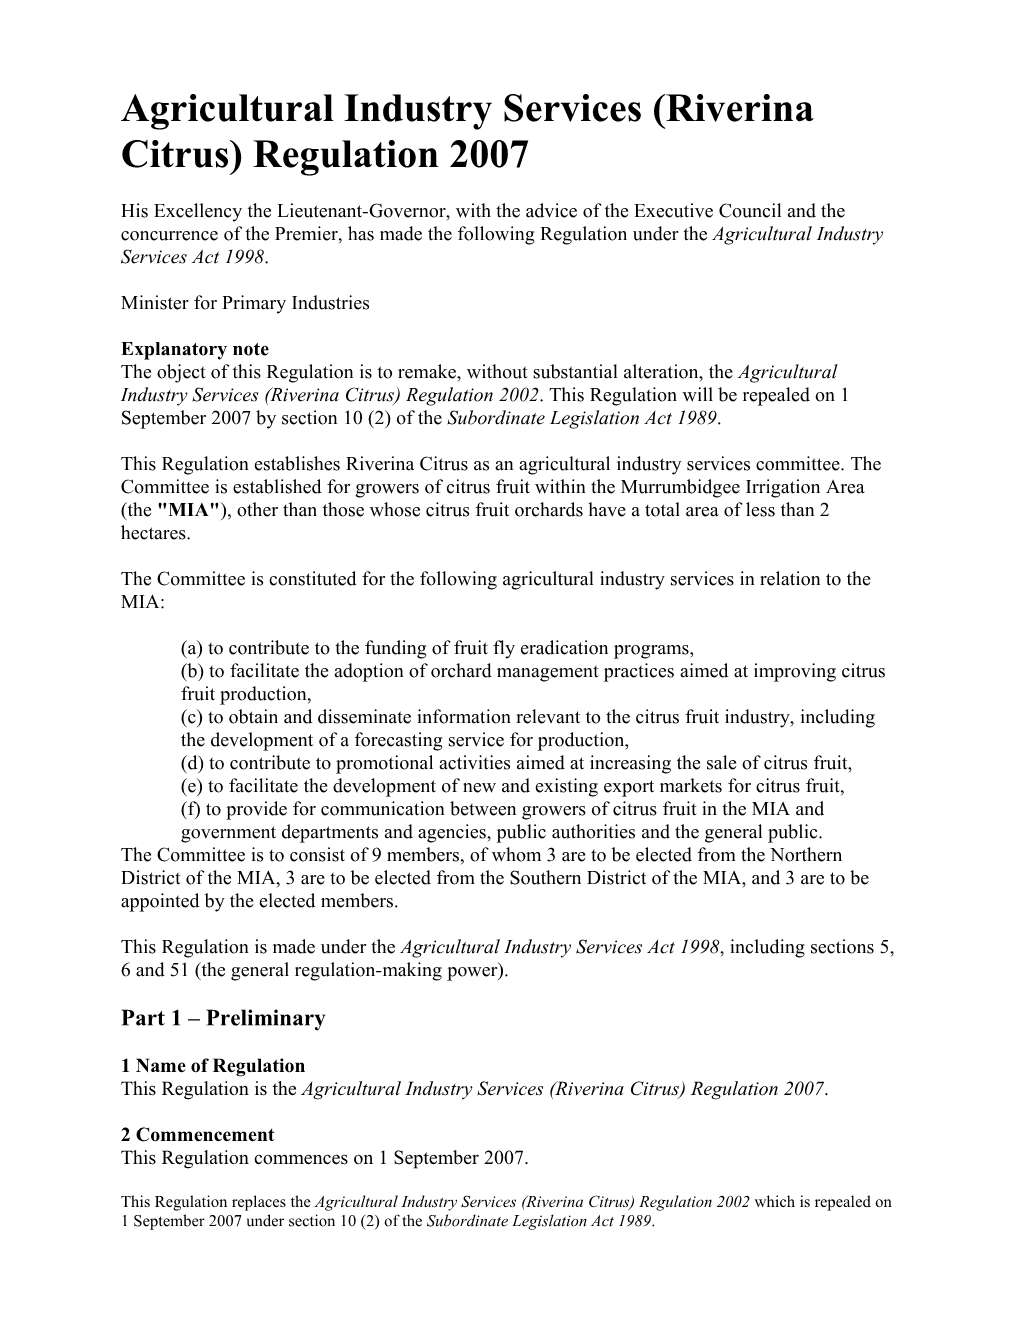 Agricultural Industry Services (Riverina Citrus) Regulation 2007